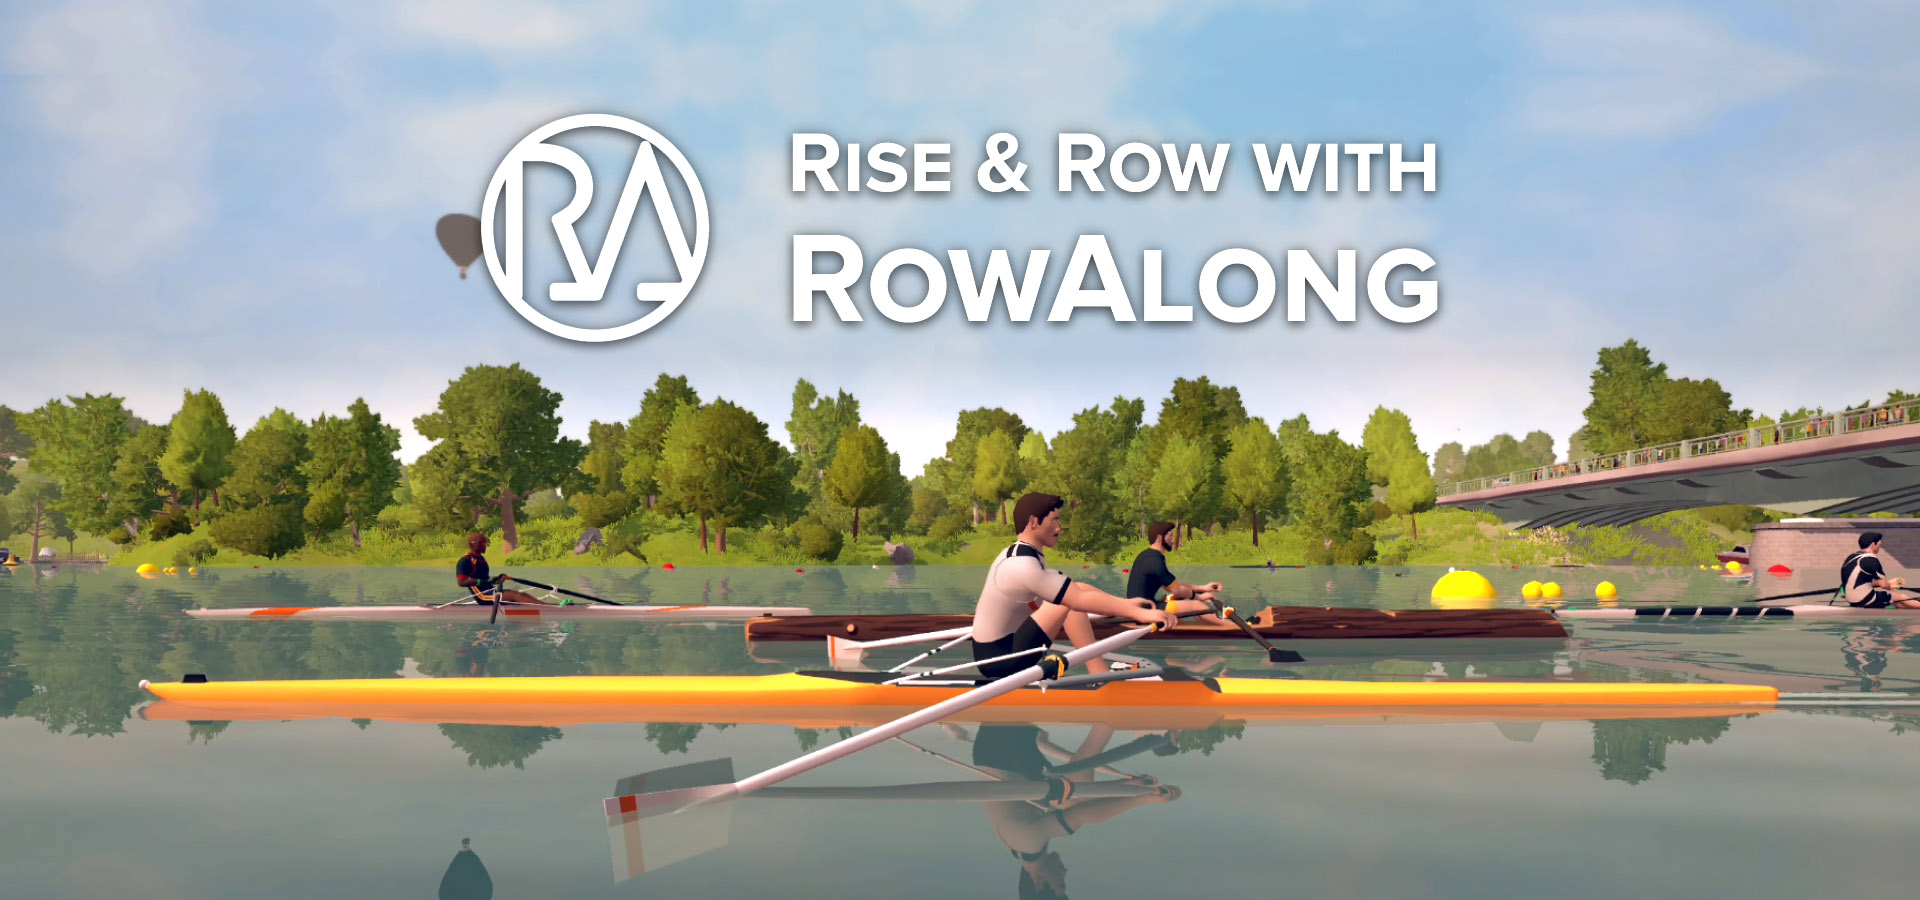 Image of 4 people rowing